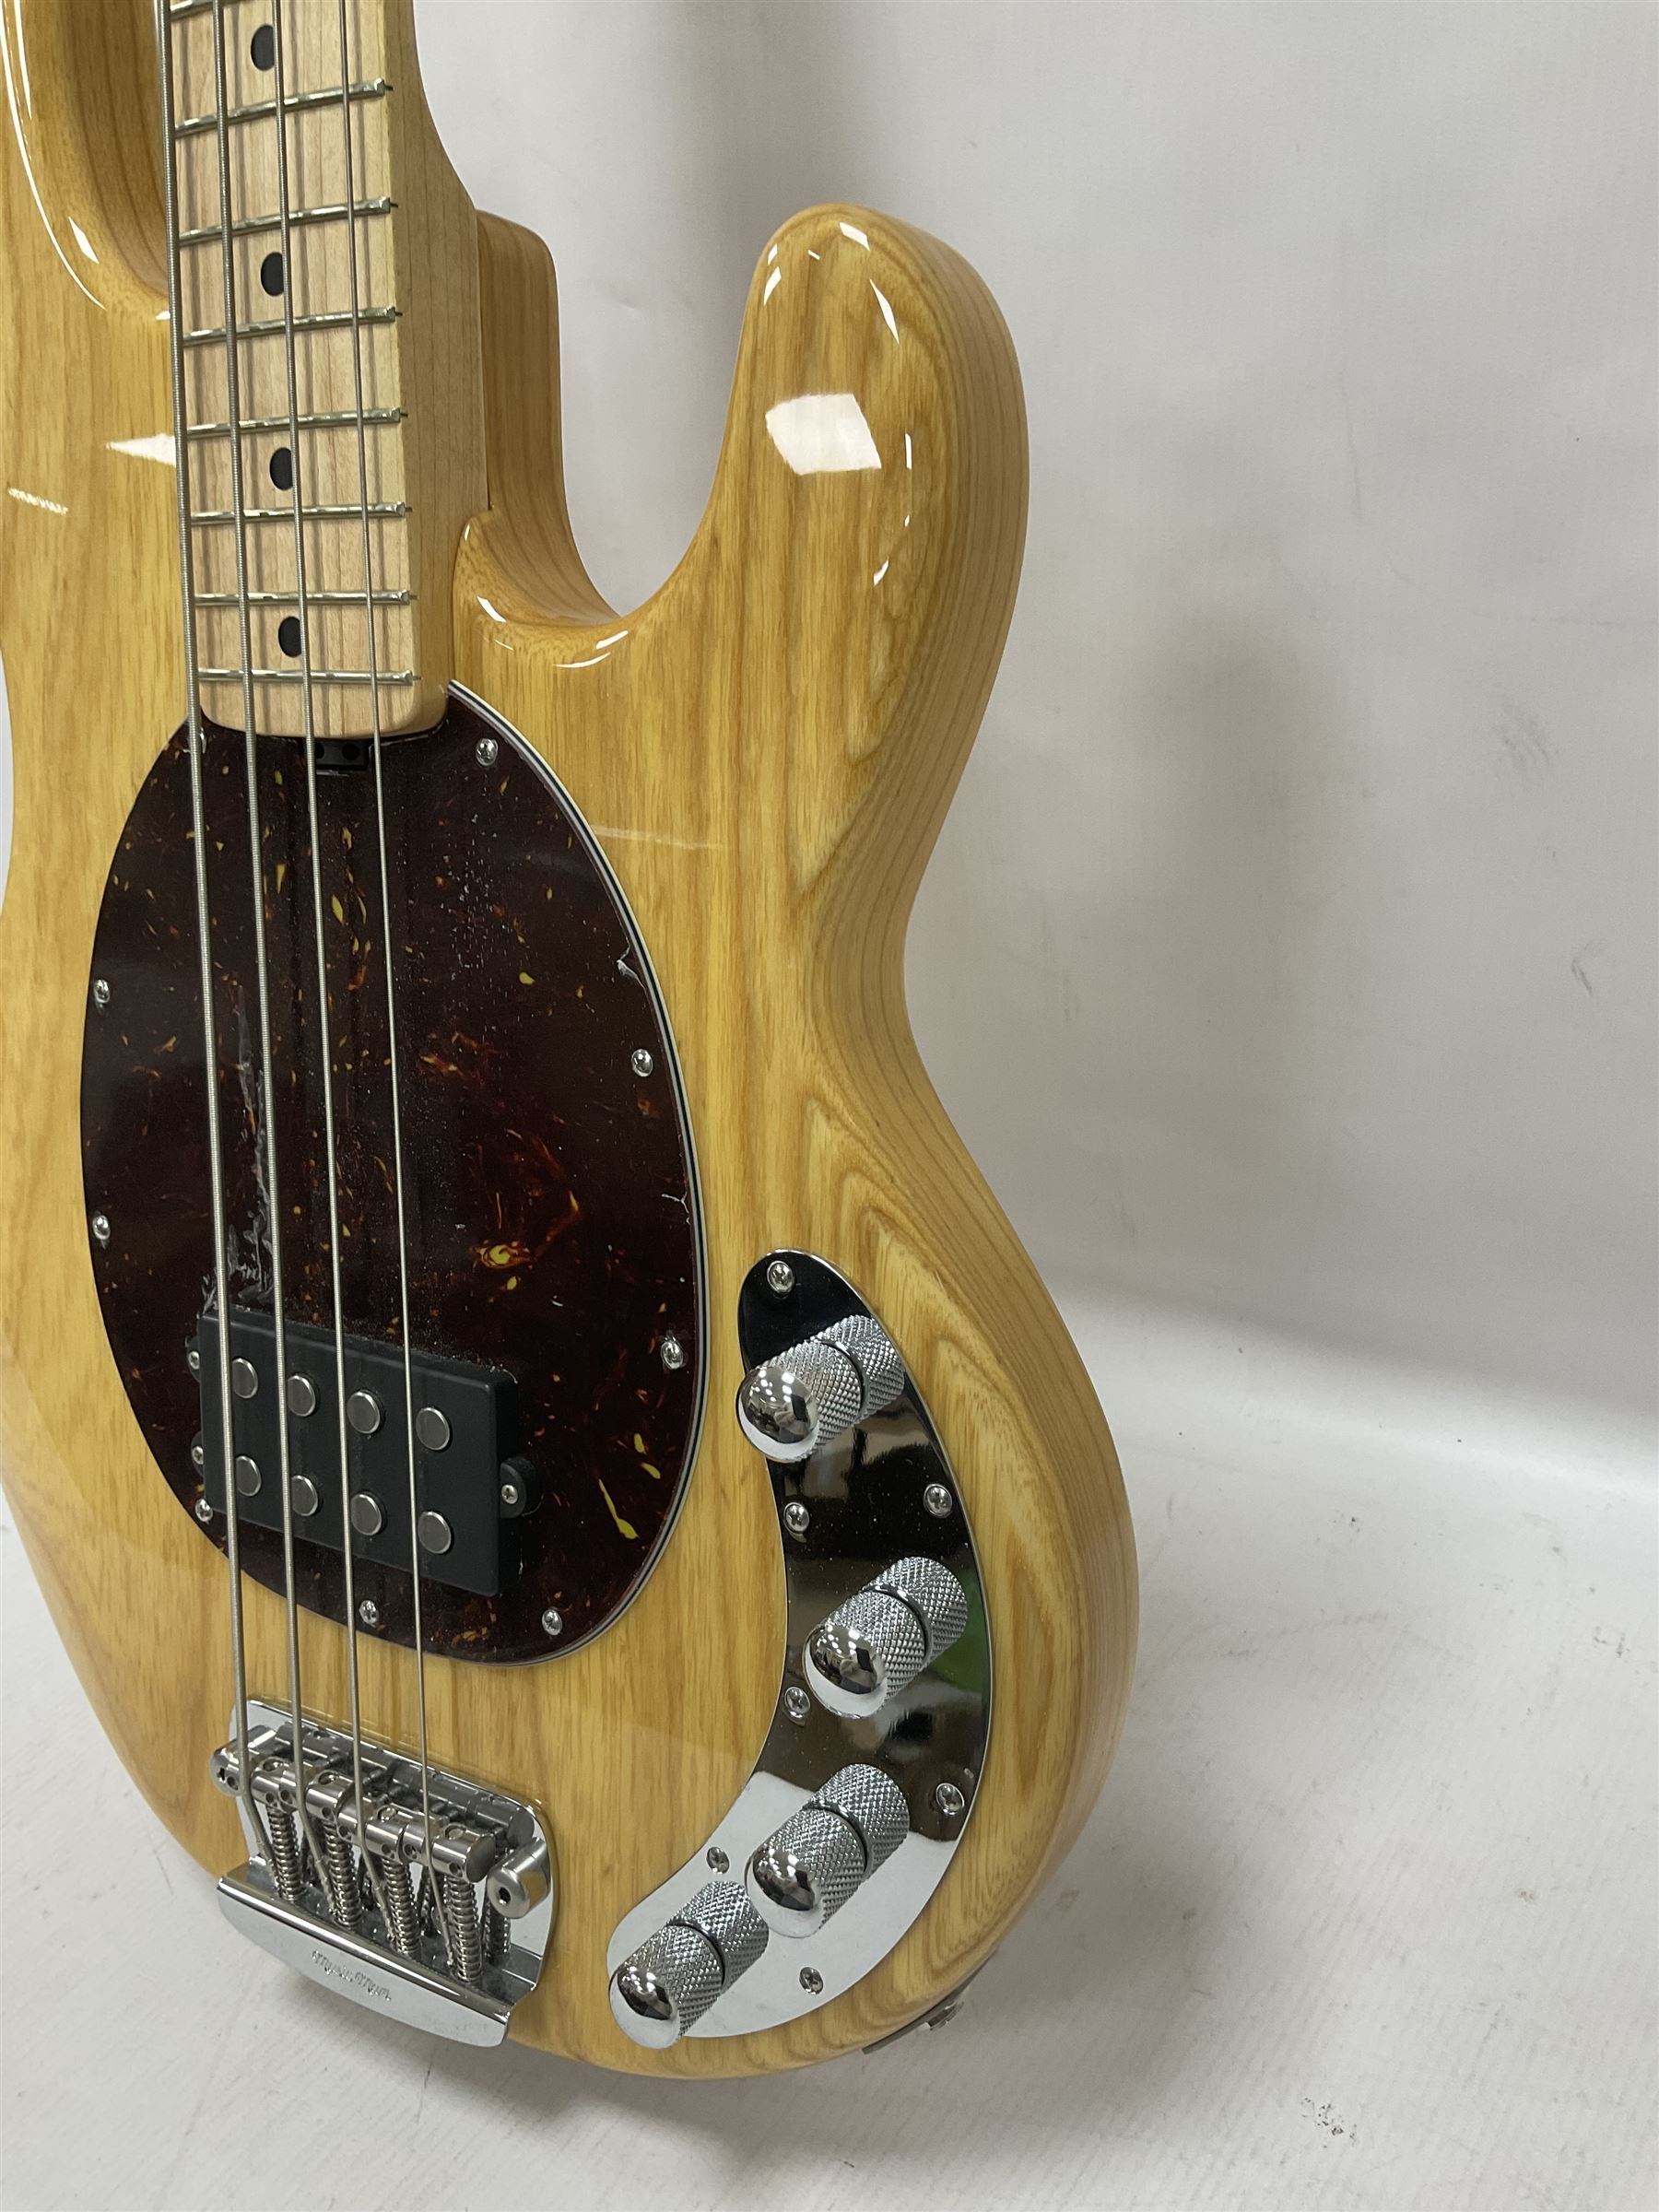 Ernie Ball Music Man Sting Ray 4 string bass guitar - Image 9 of 24